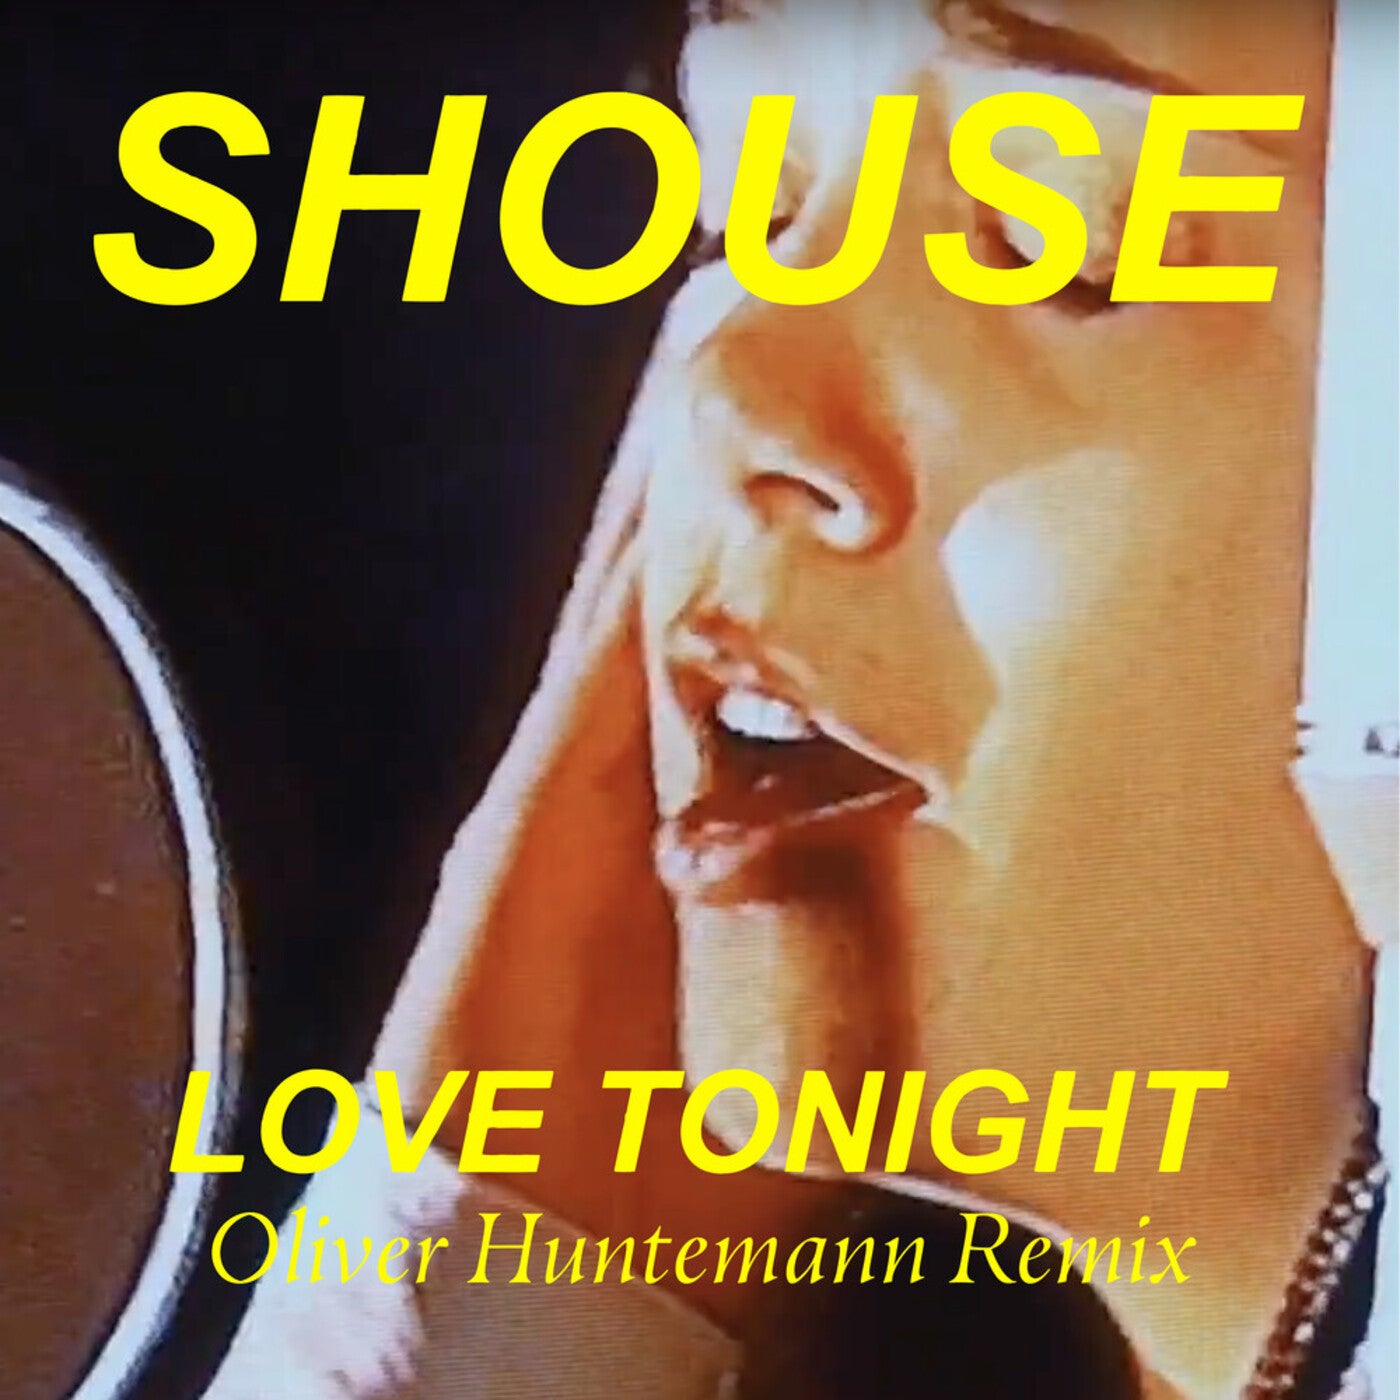 Download Love Tonight (Oliver Huntemann Remix) on Electrobuzz